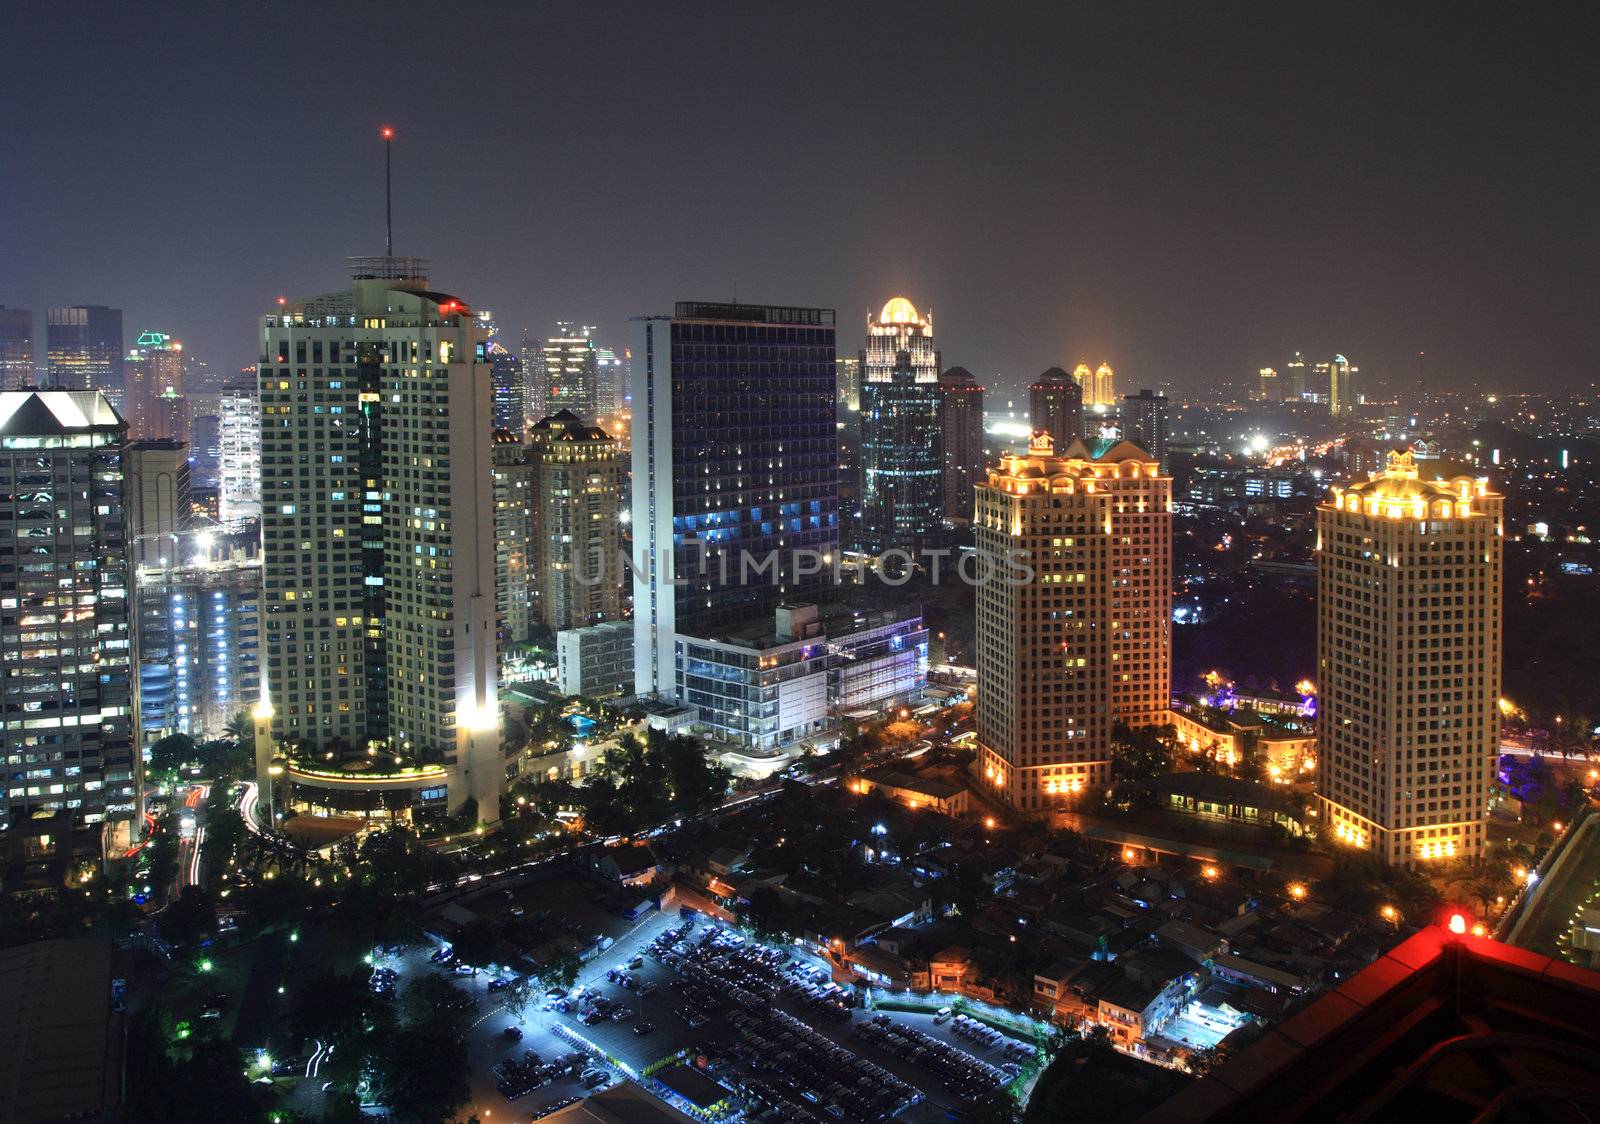 Nightview of a metropolitan city